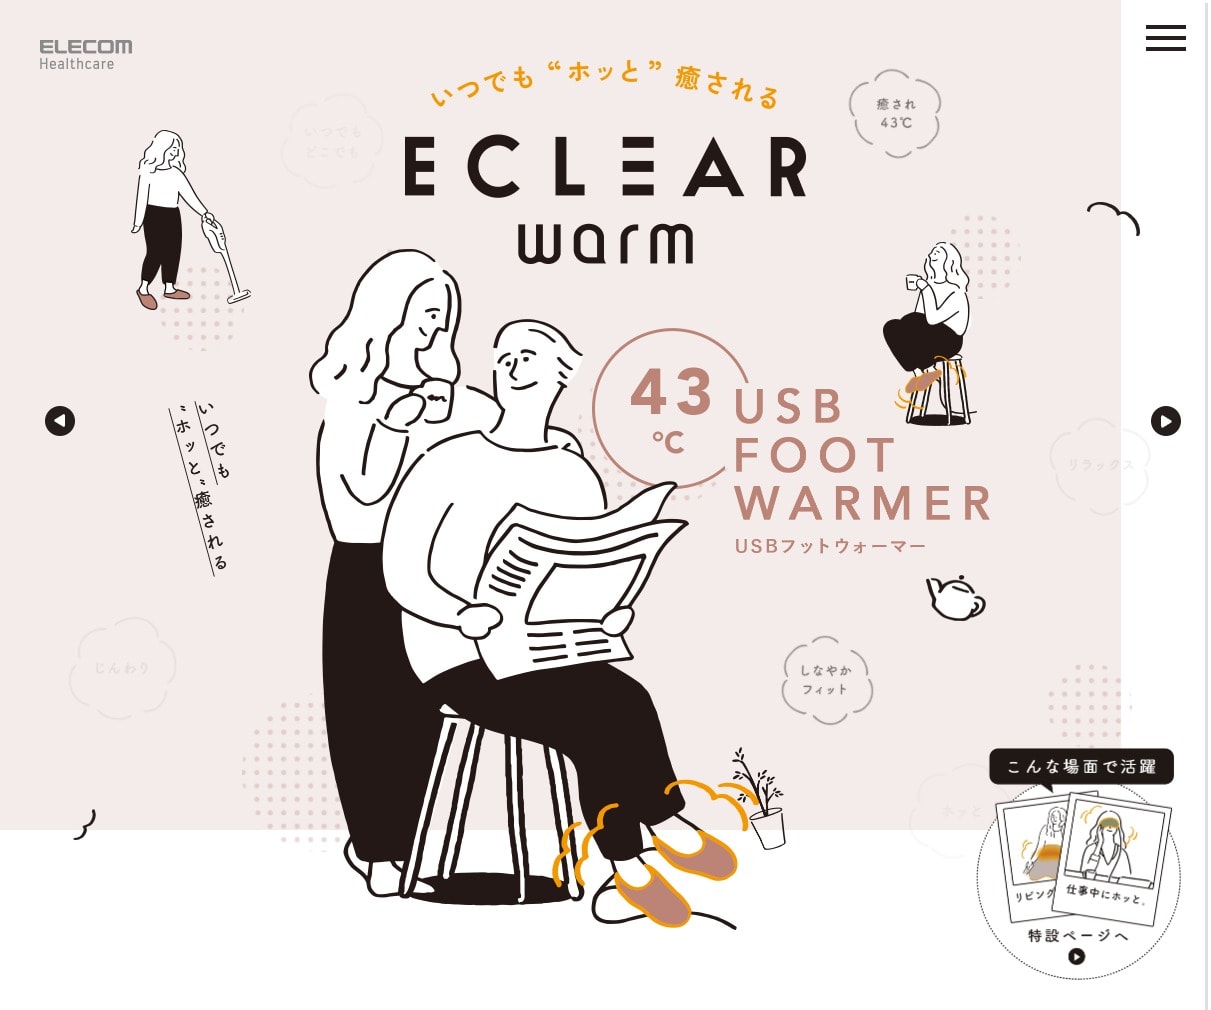 ECLEAR warm | ELECOM Healthcare